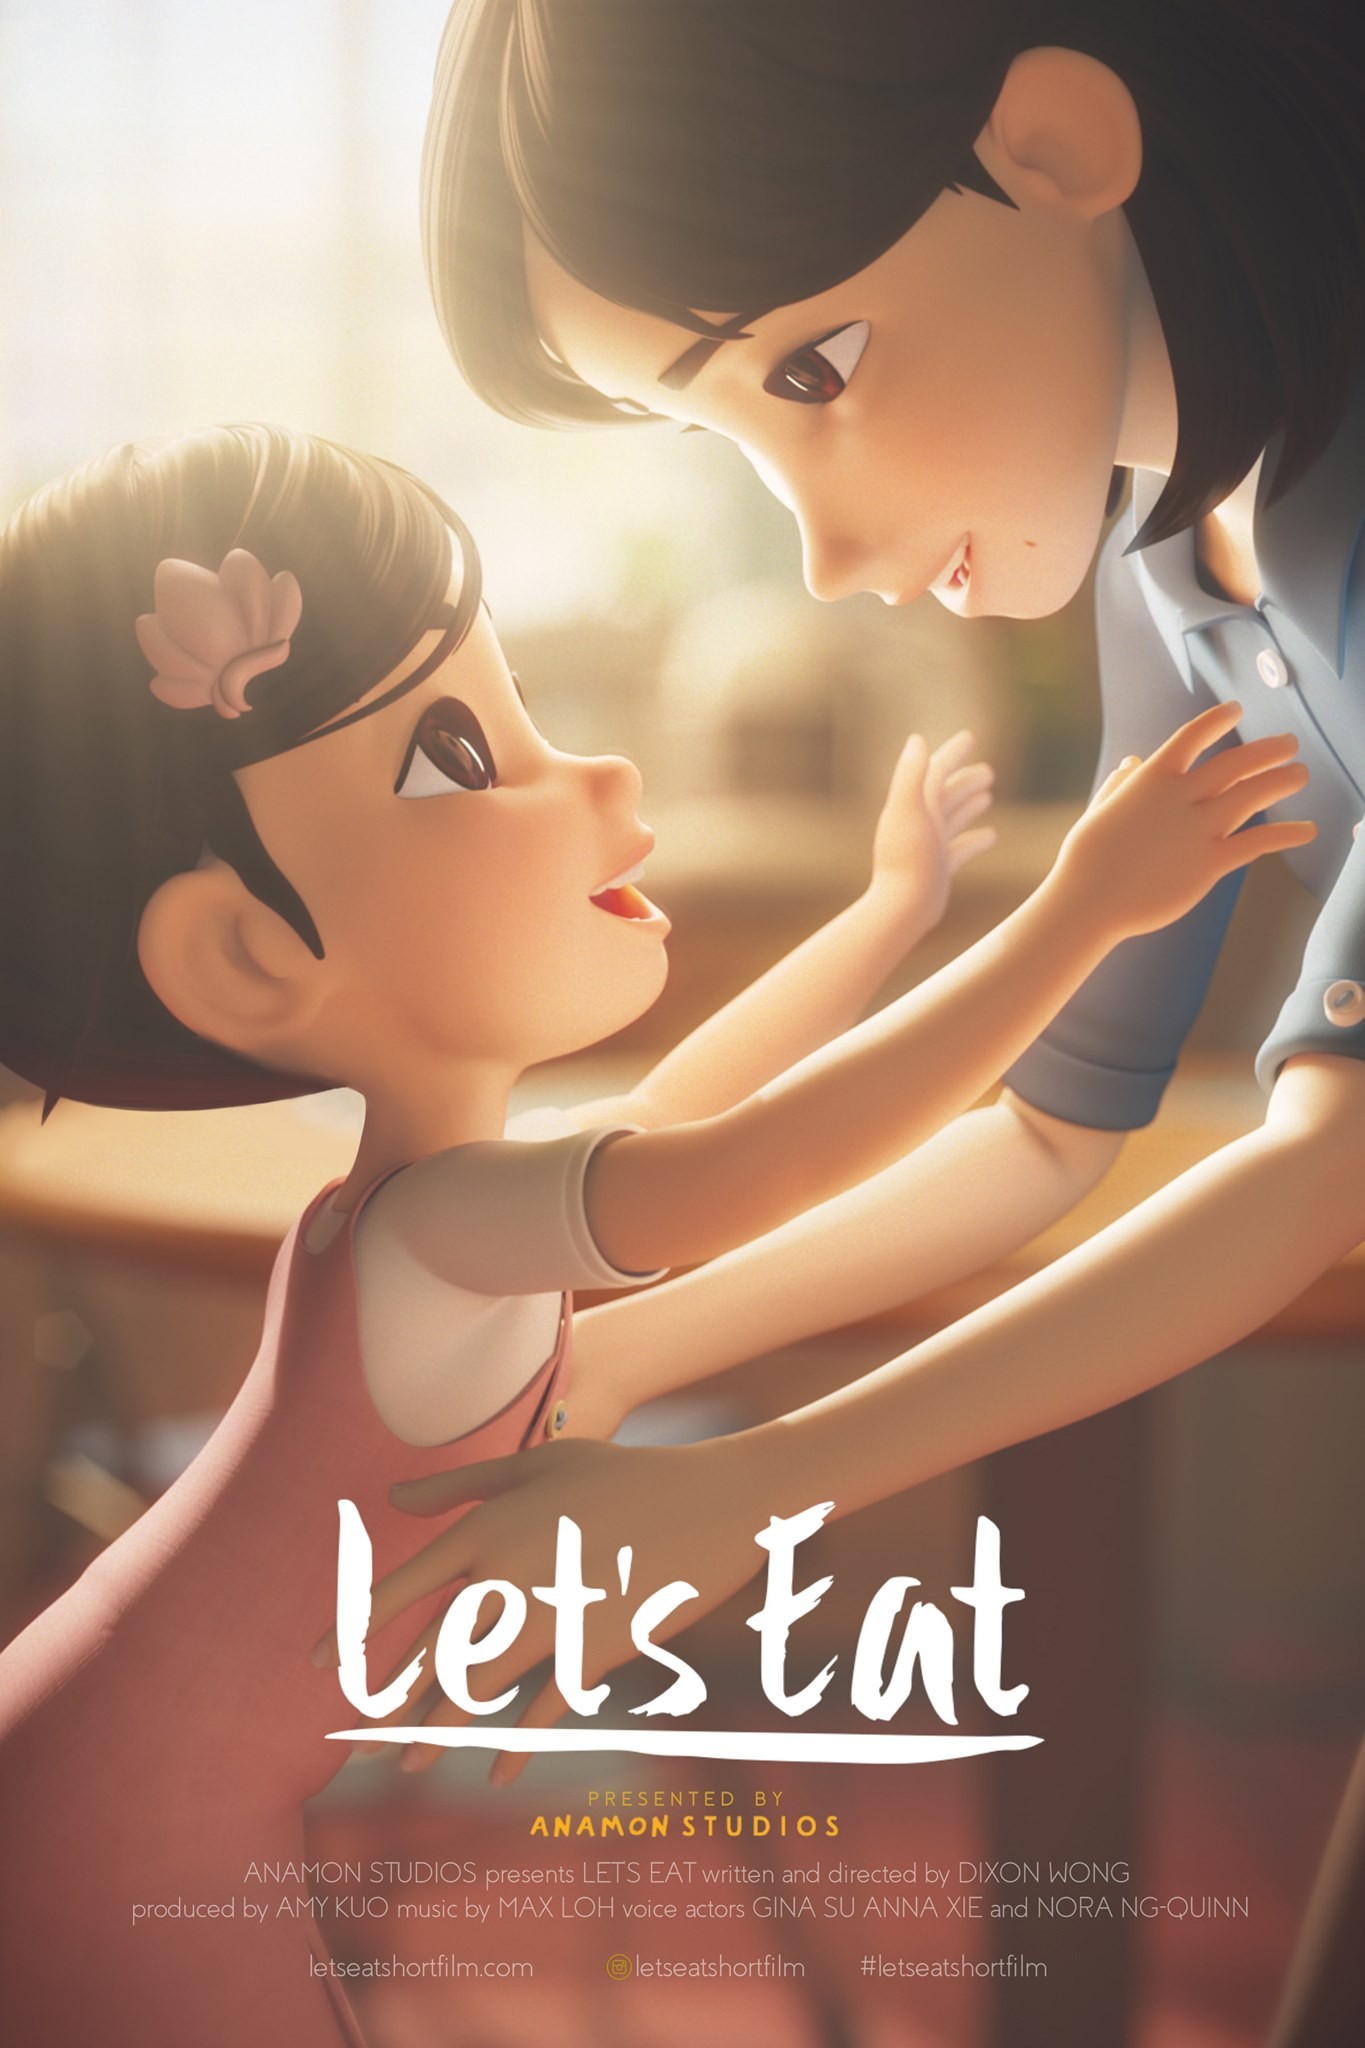 Mega Sized Movie Poster Image for Let's Eat